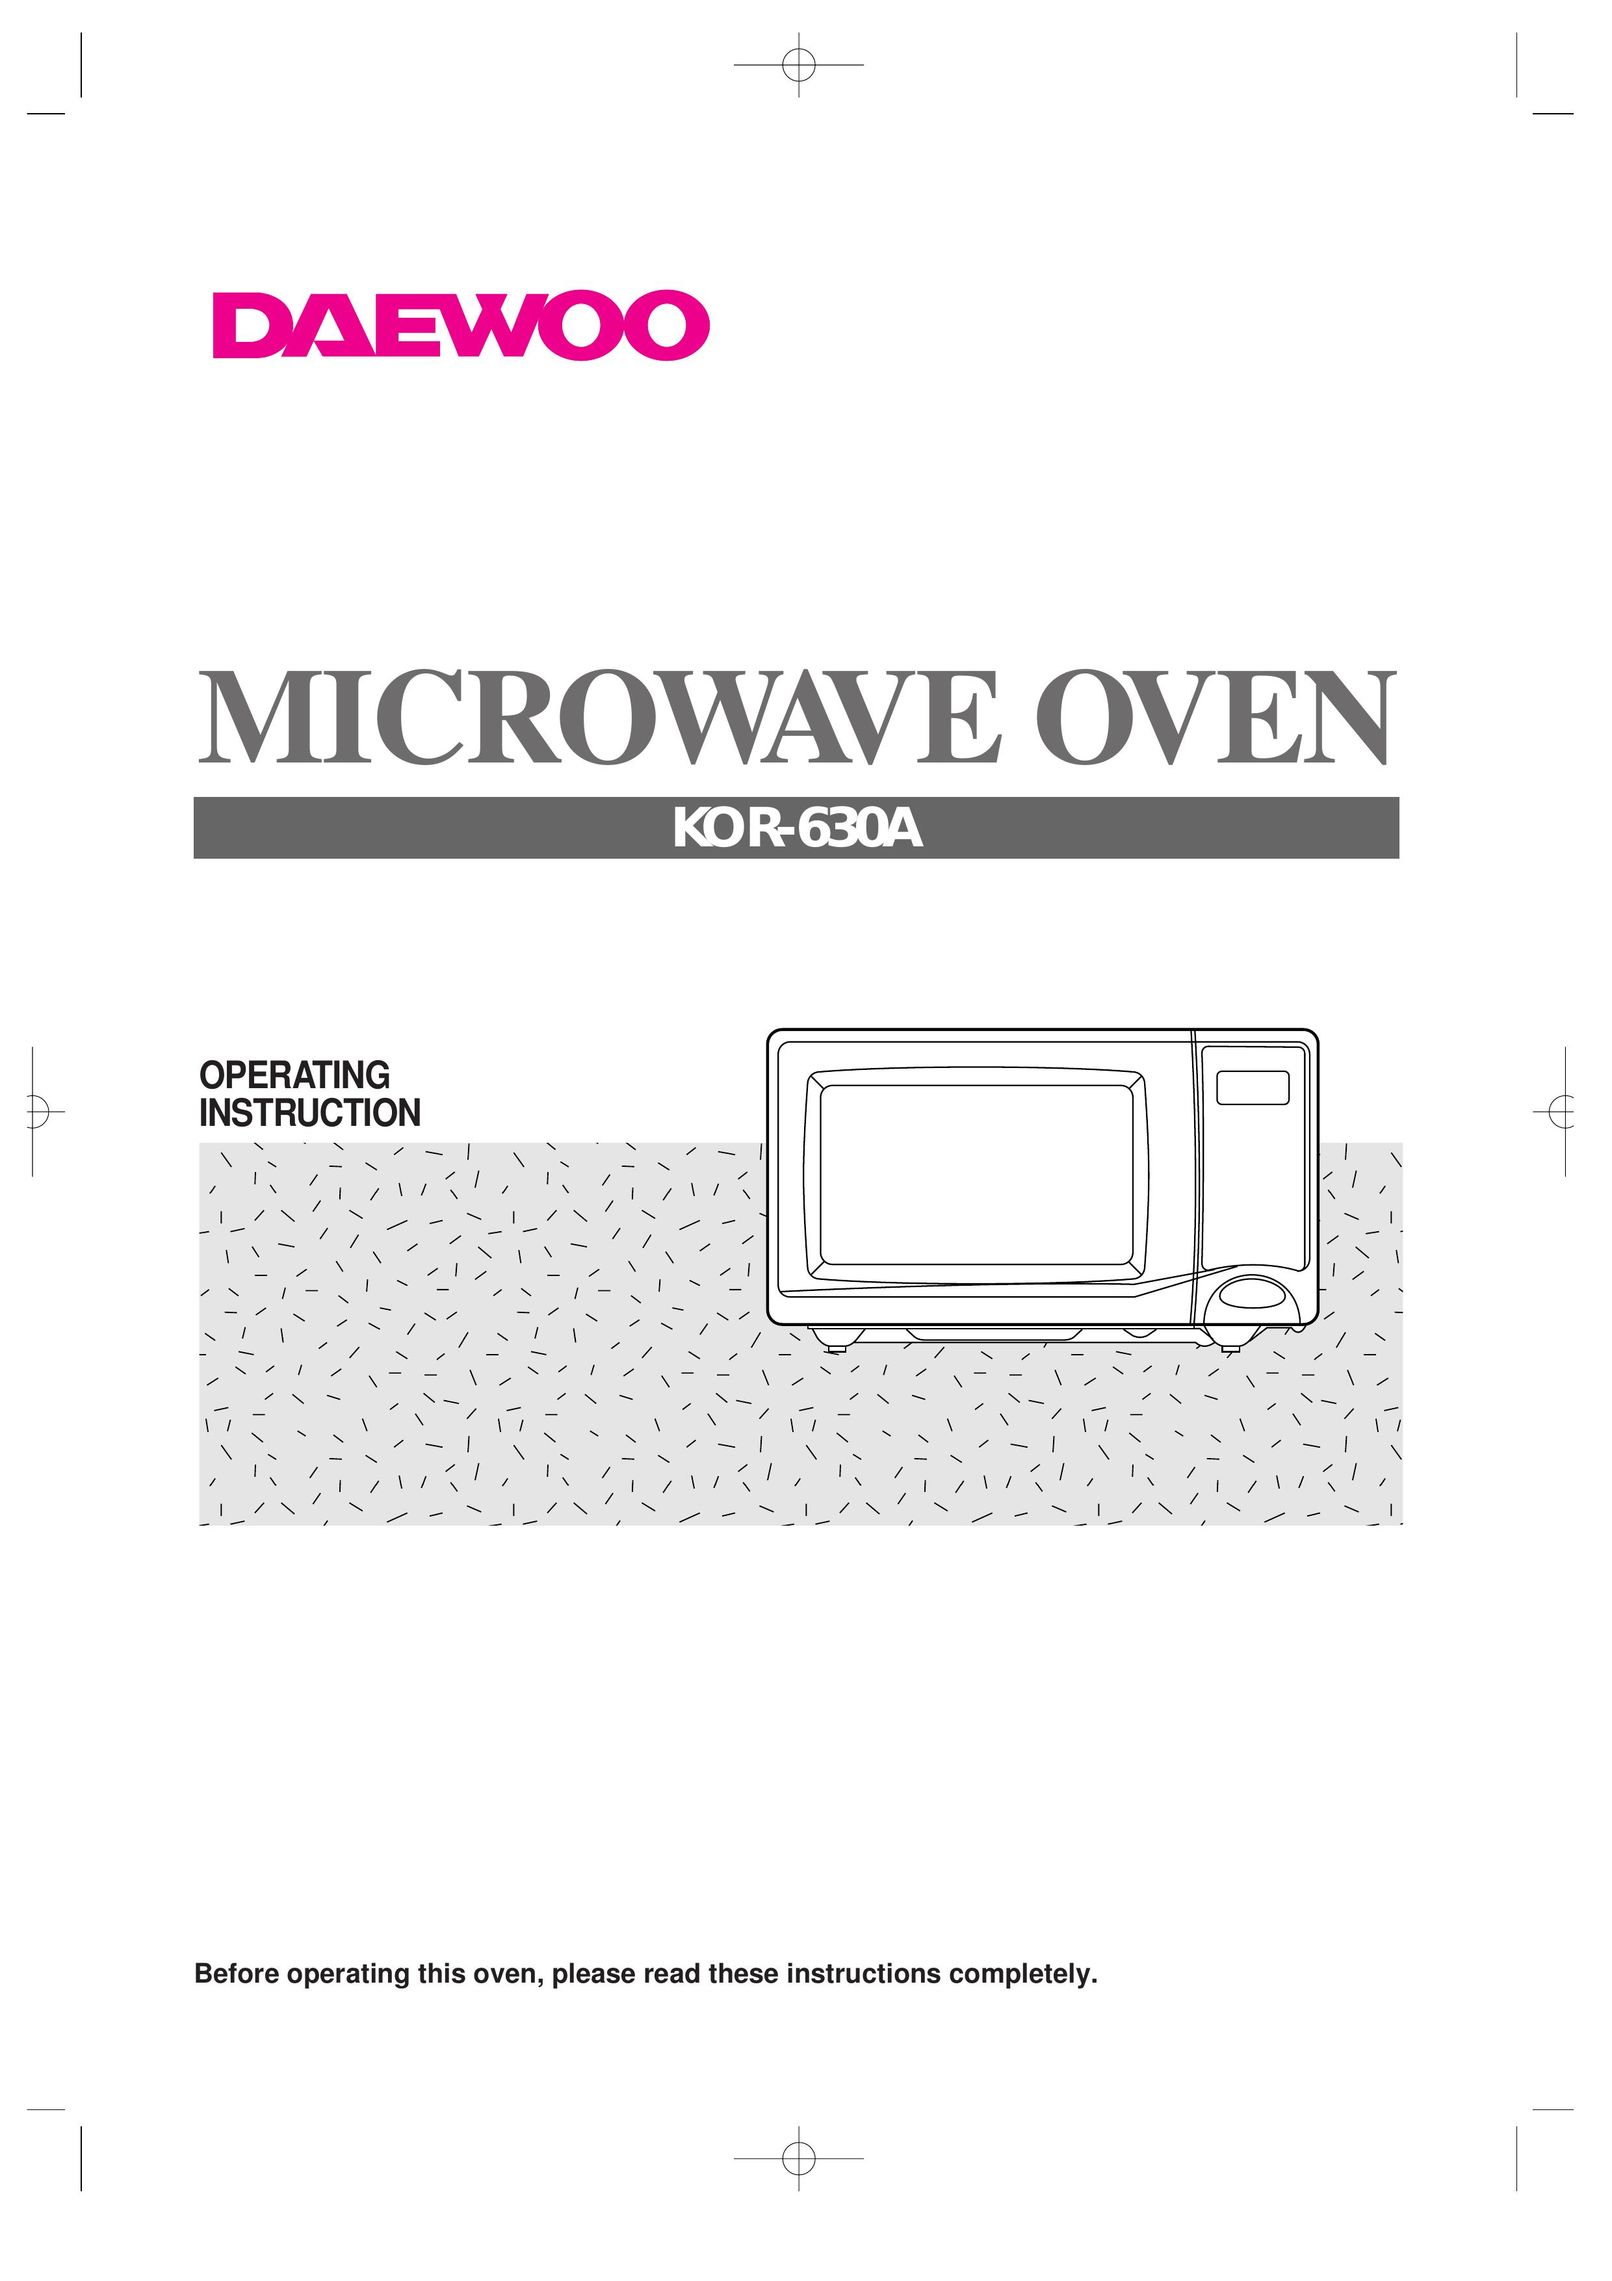 Daewoo KOR-630A Microwave Oven User Manual